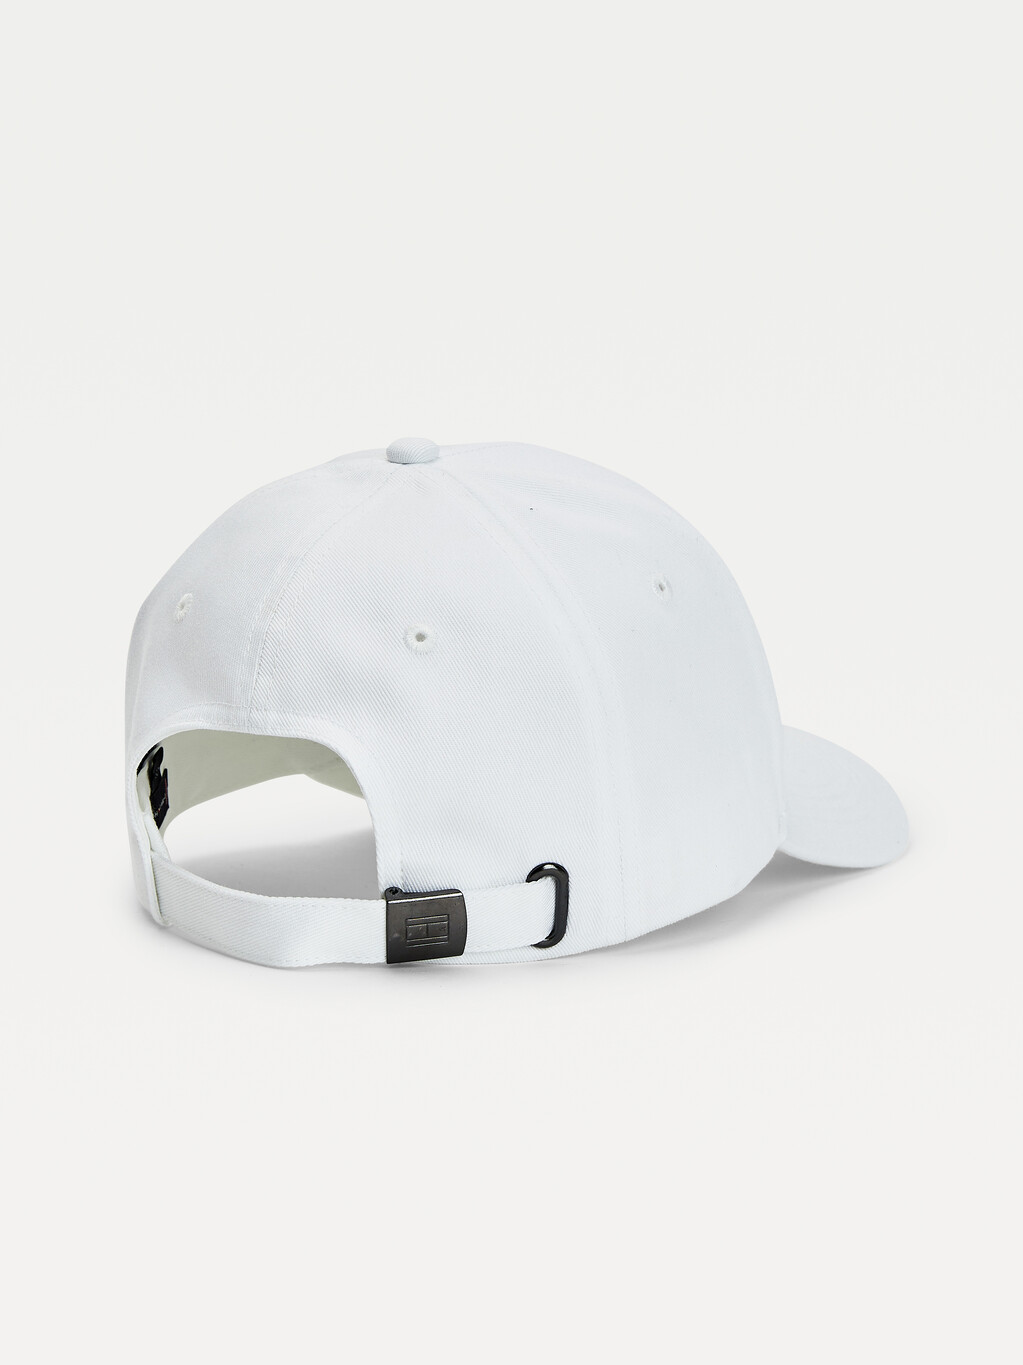 Tommy Hilfiger 經典有機棉棒球帽, White, hi-res